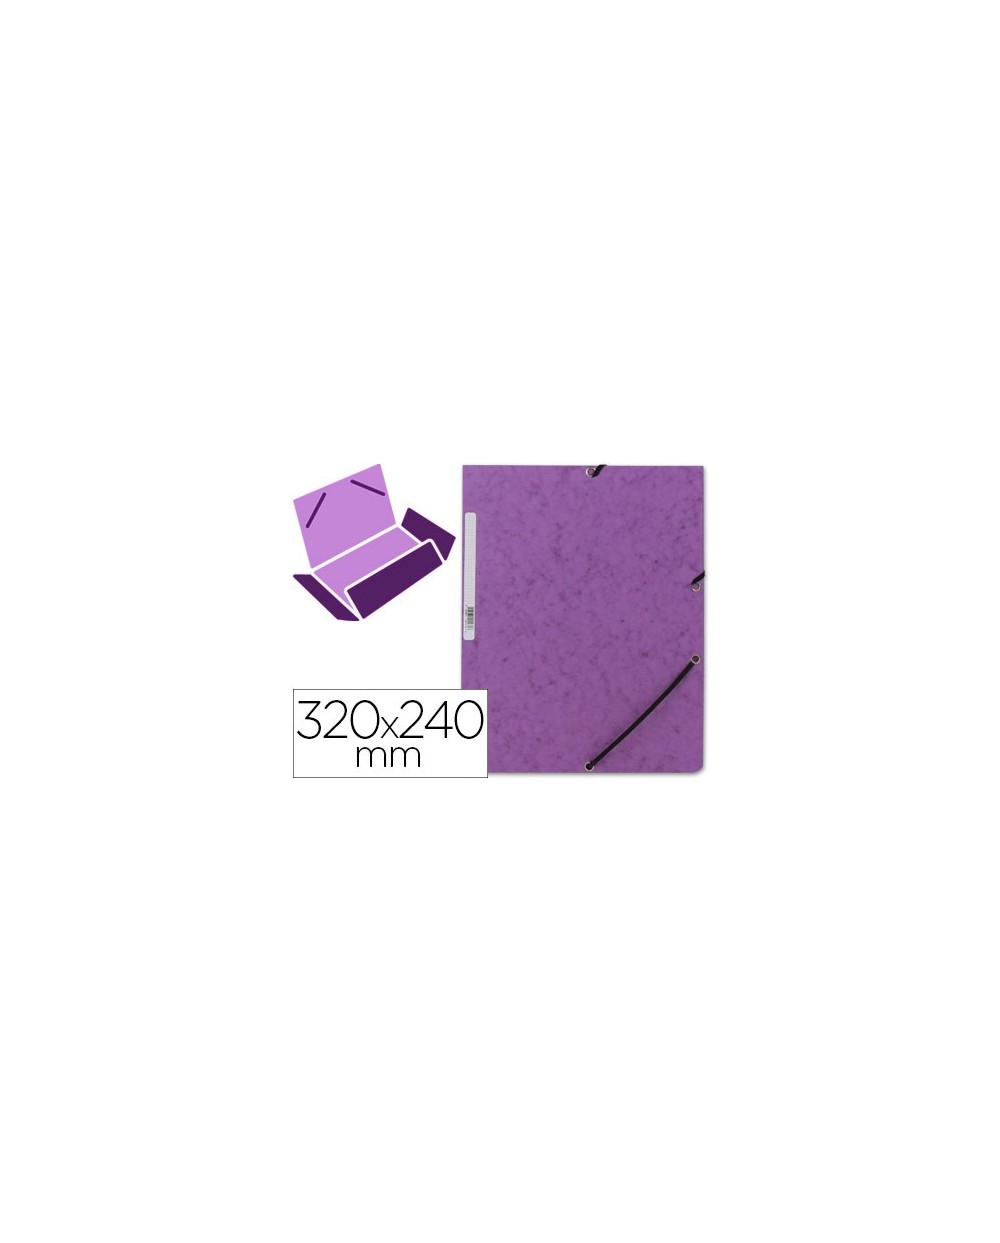 Carpeta q connect gomas kf02171 carton simil prespan solapas 320x243 mm violeta